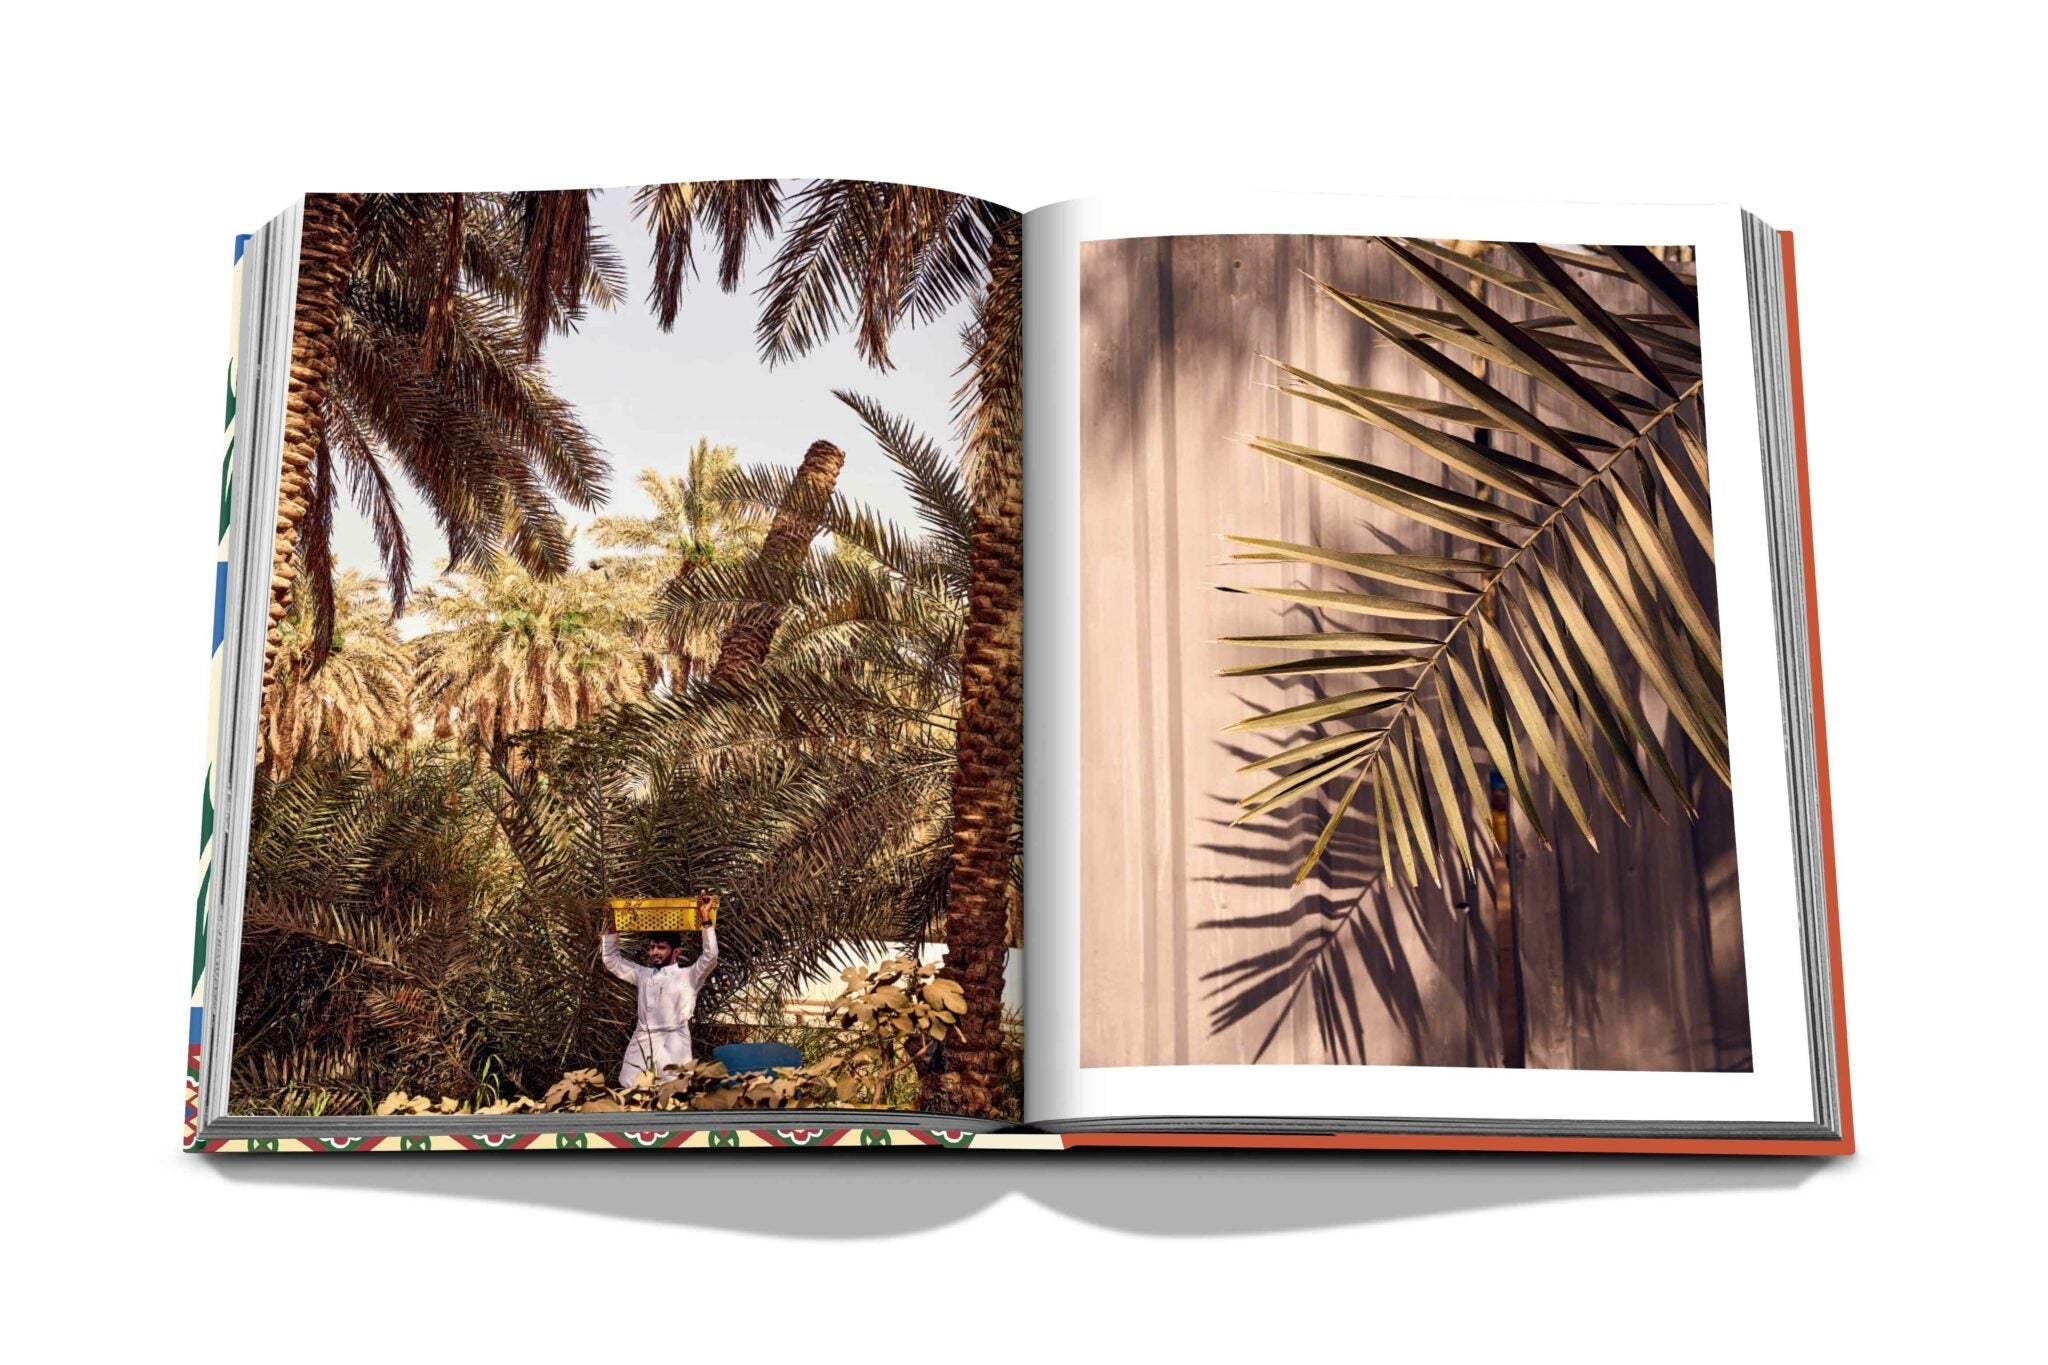 Assouline Saudi Dates: A Portrait Of The Sacred Fruit